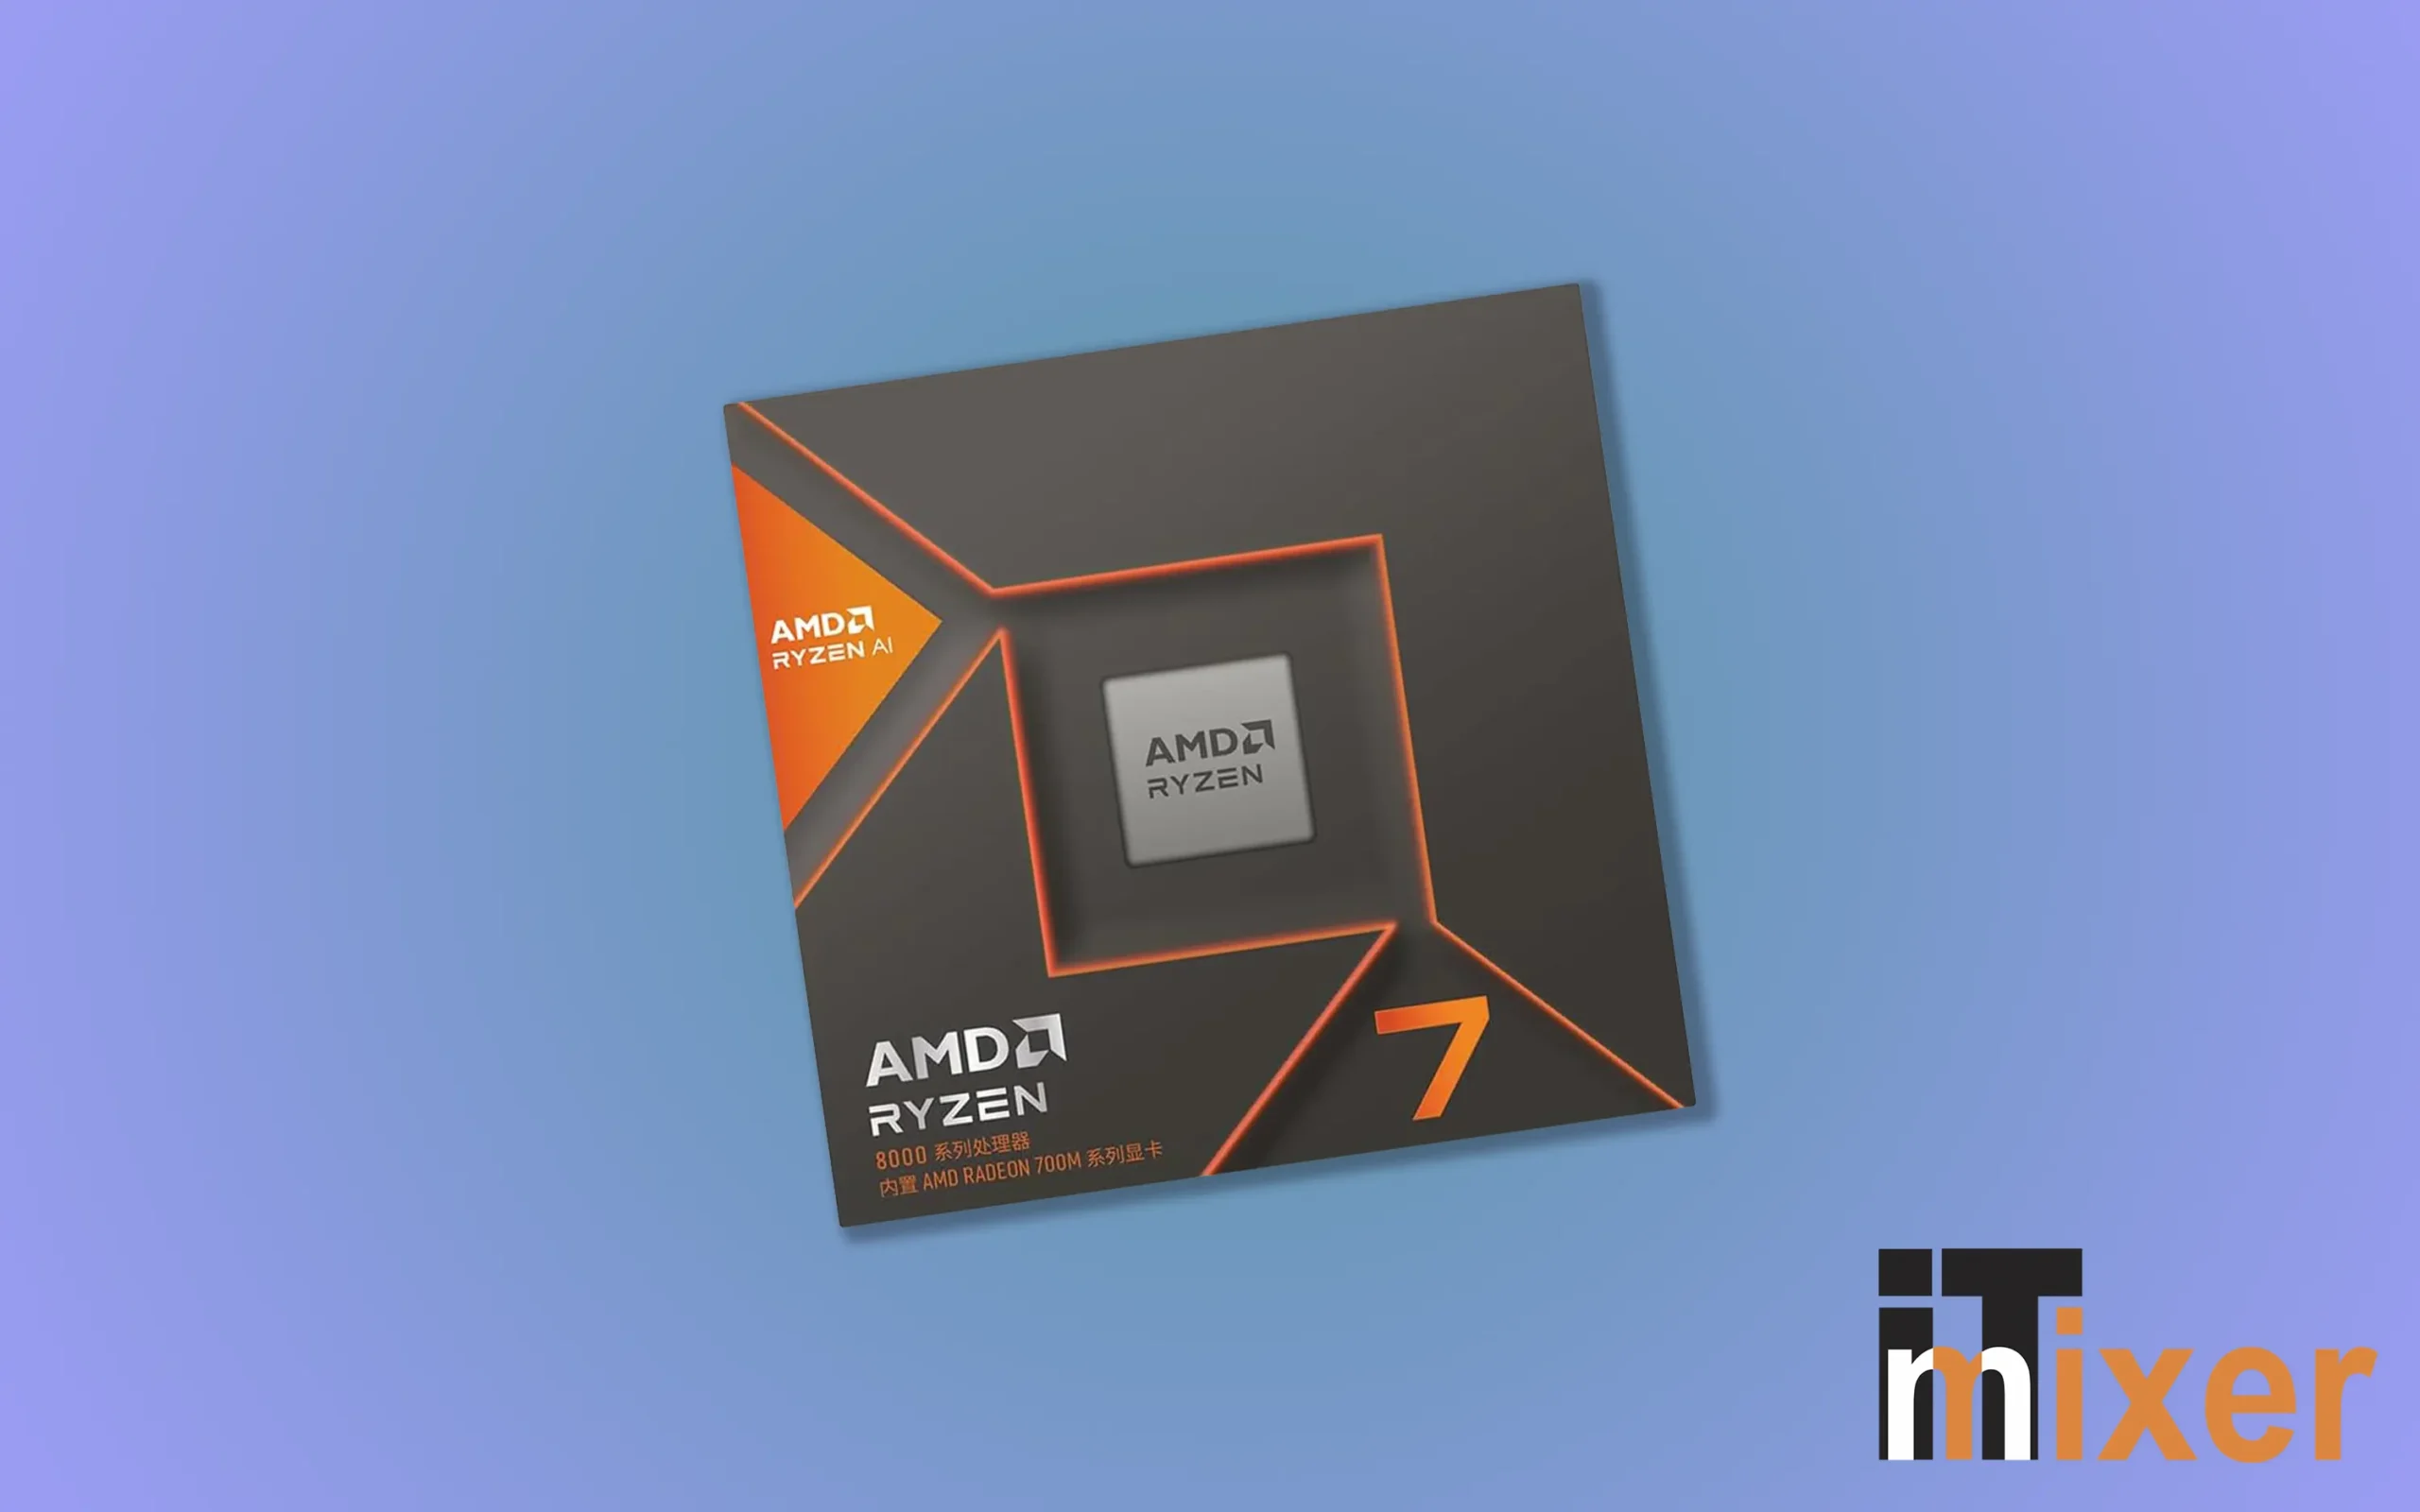 Procesor AMD Ryzen 7 8000 serije